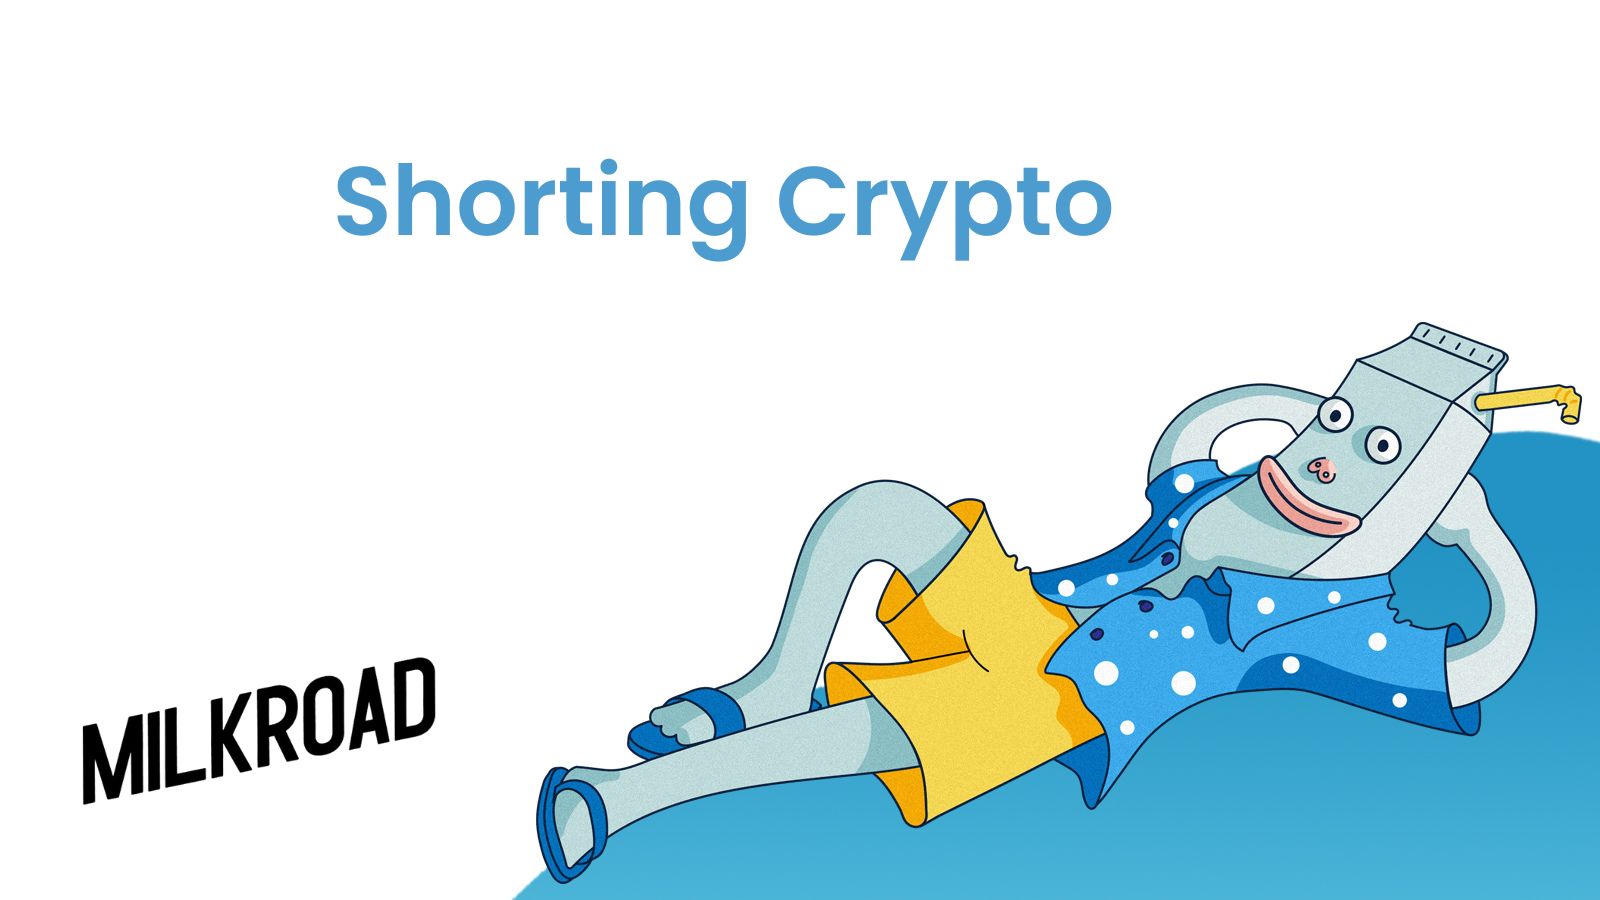 Shorting Crypto